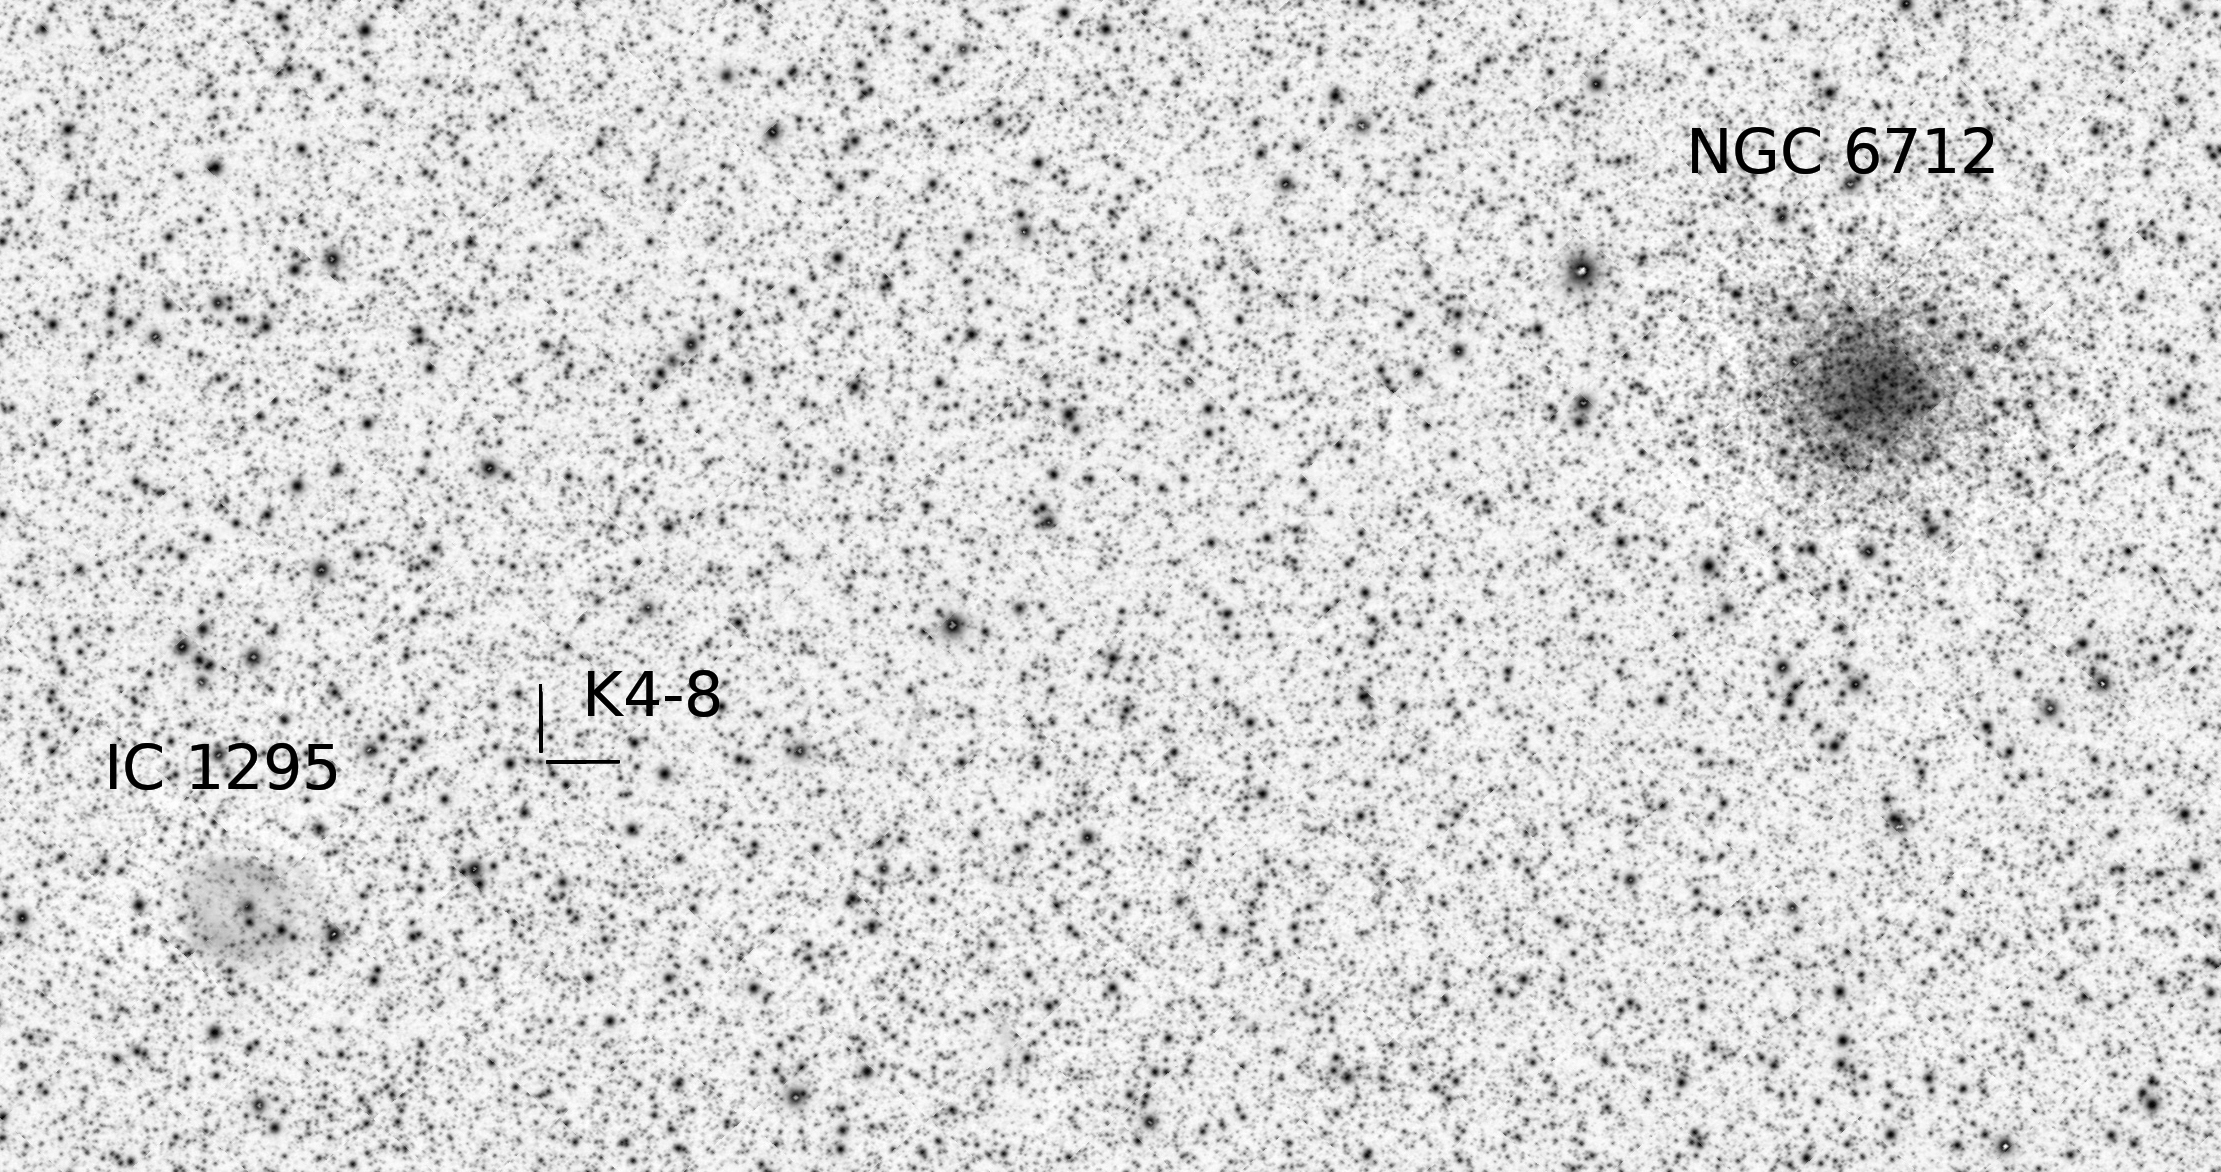 Skyguide 2023-2 - NGC 6712, IC 1295 & K4-8